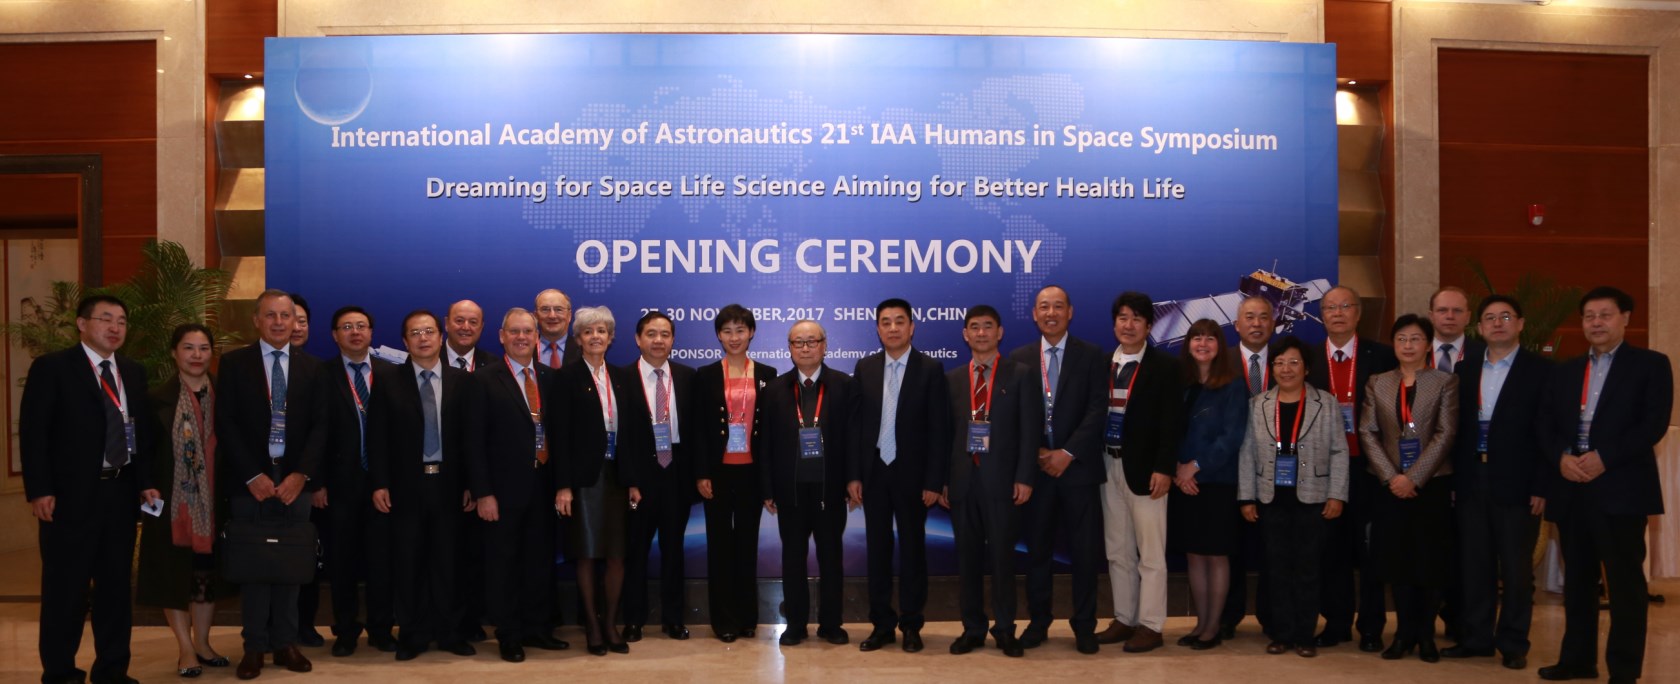 21st IAA Humans in Space Symposium, 27-30 November 2017, Shenzhen, China